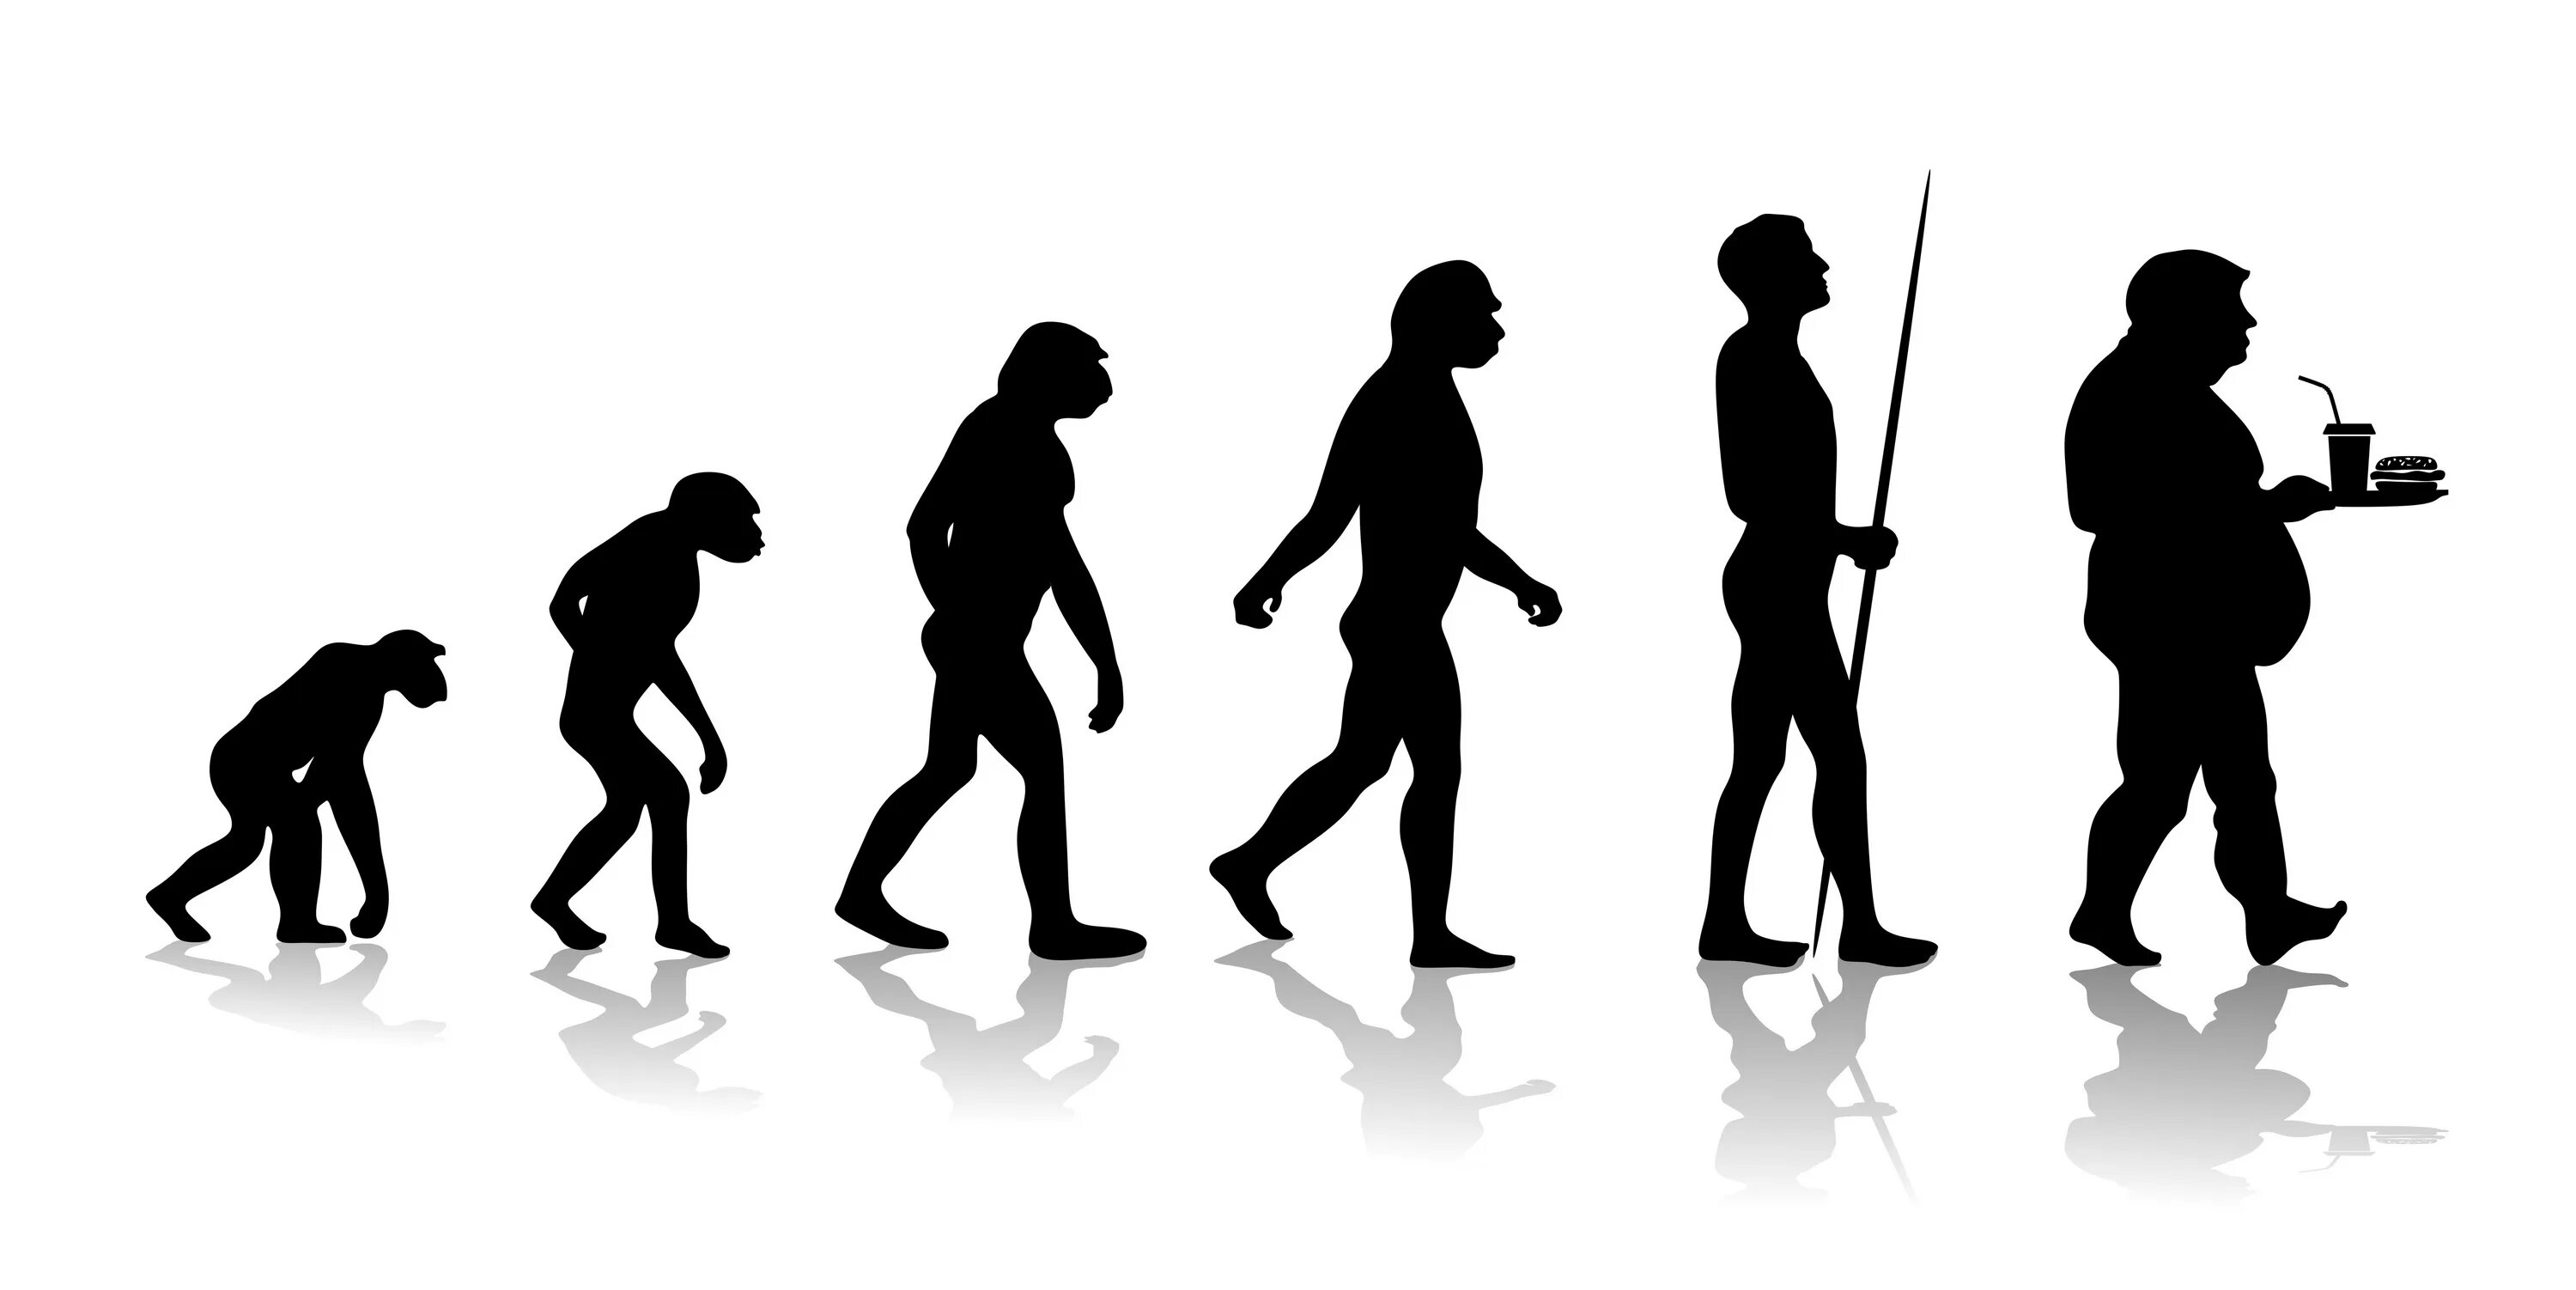 Развитие прогресс эволюция. Эволюция человека. От обезьяны до человека. Человек от обезьяны до человека. Эволюция картинки.